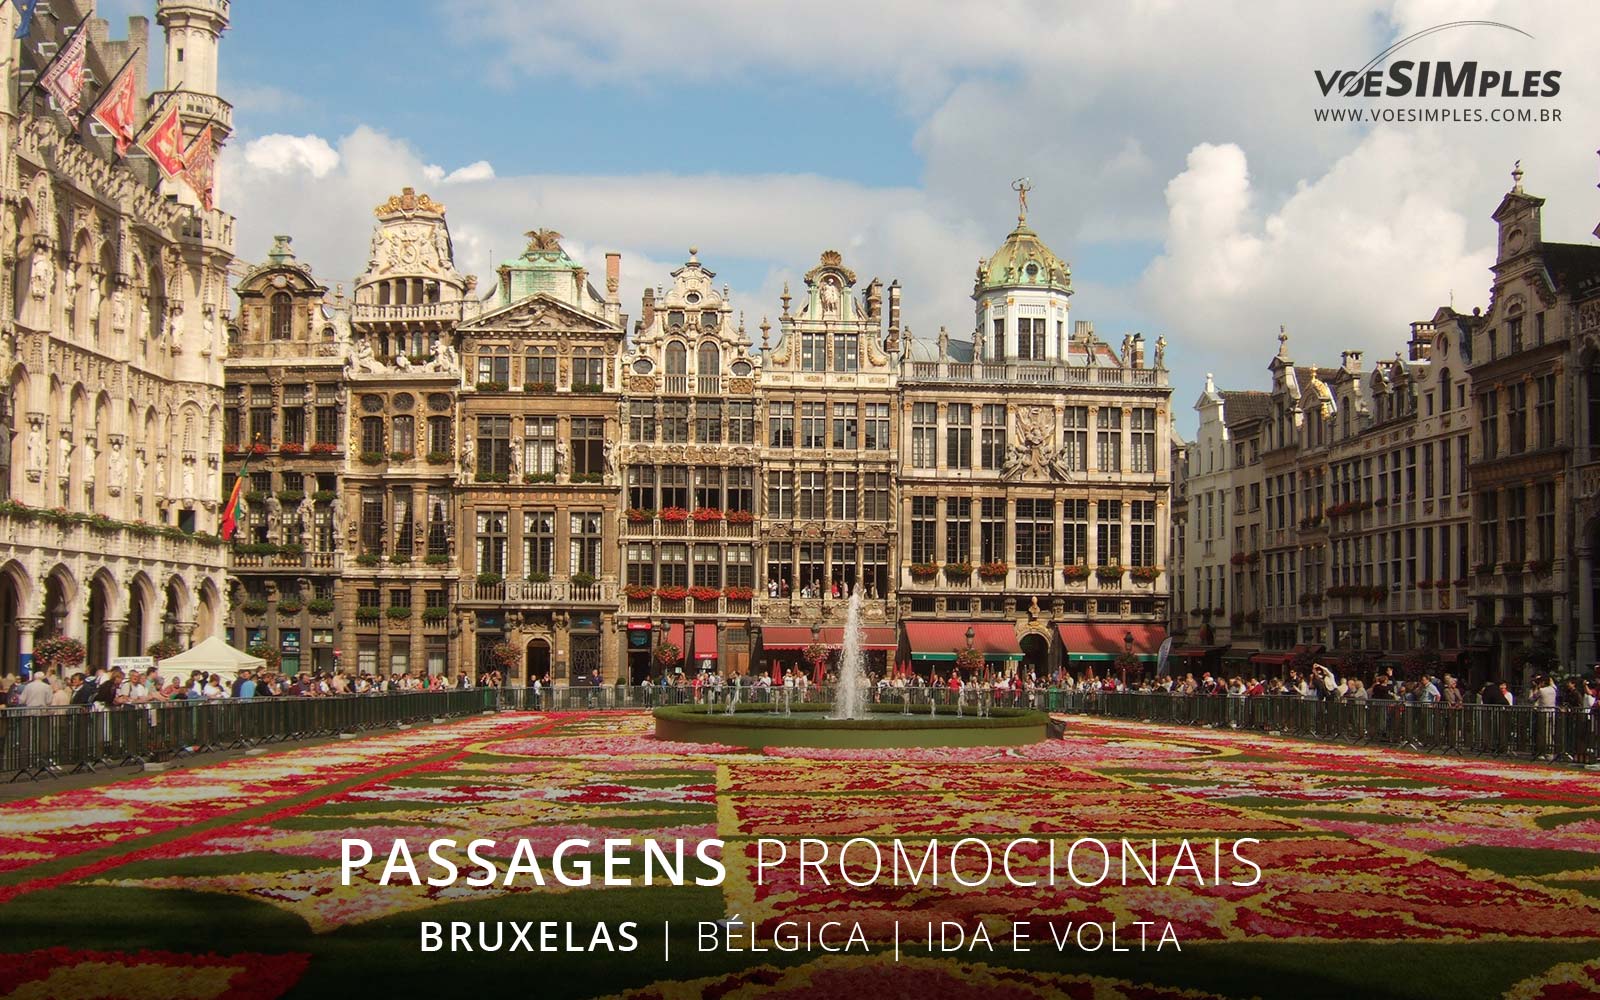 passagens-aereas-baratas-bruxelas-belgica-europeu-voe-simples-passages-aereas-promocionais-belgica-passagens-promo-bruxelas